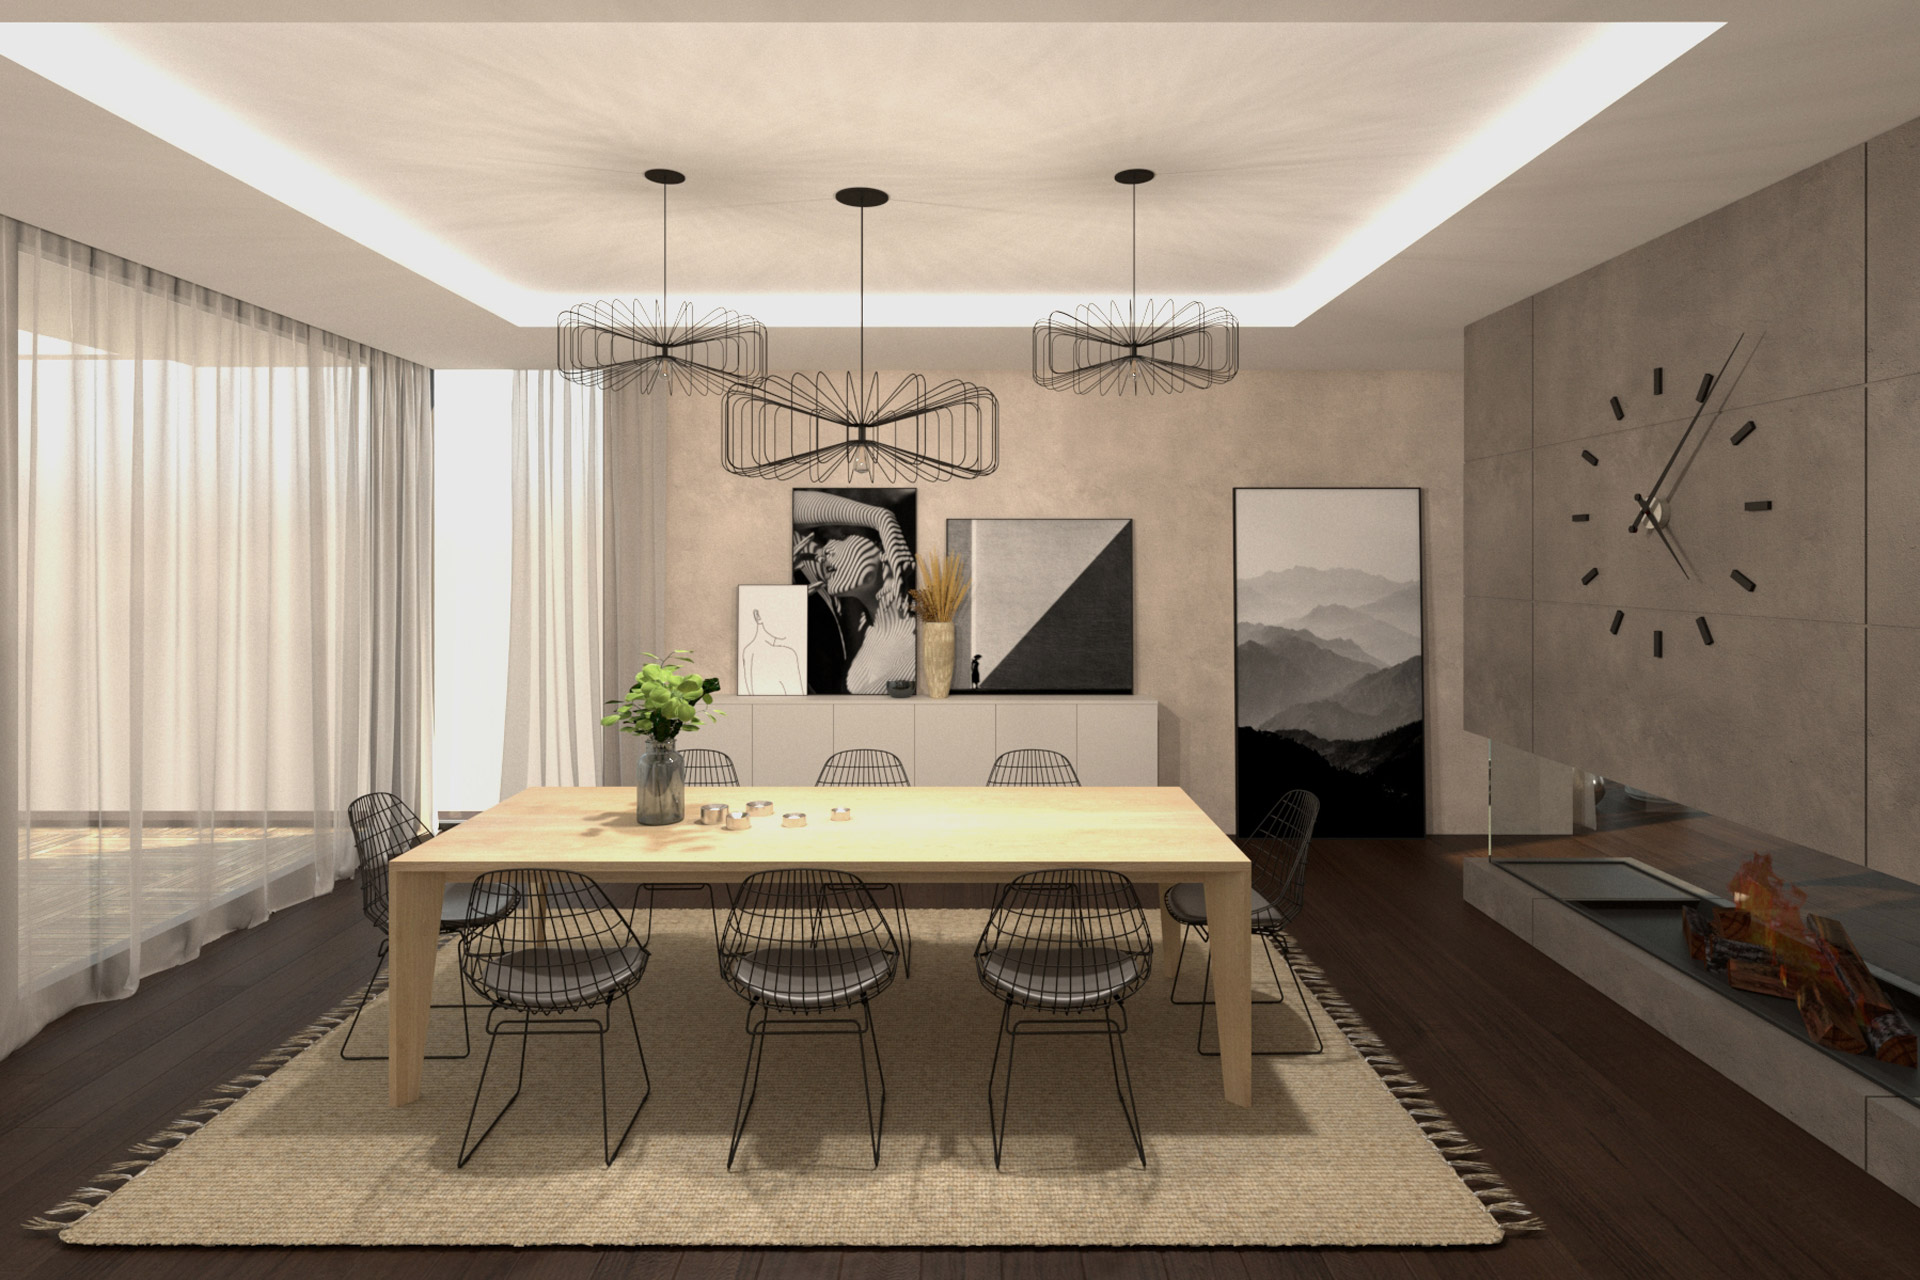 Hanak Modern interior design of the house Dining roomb